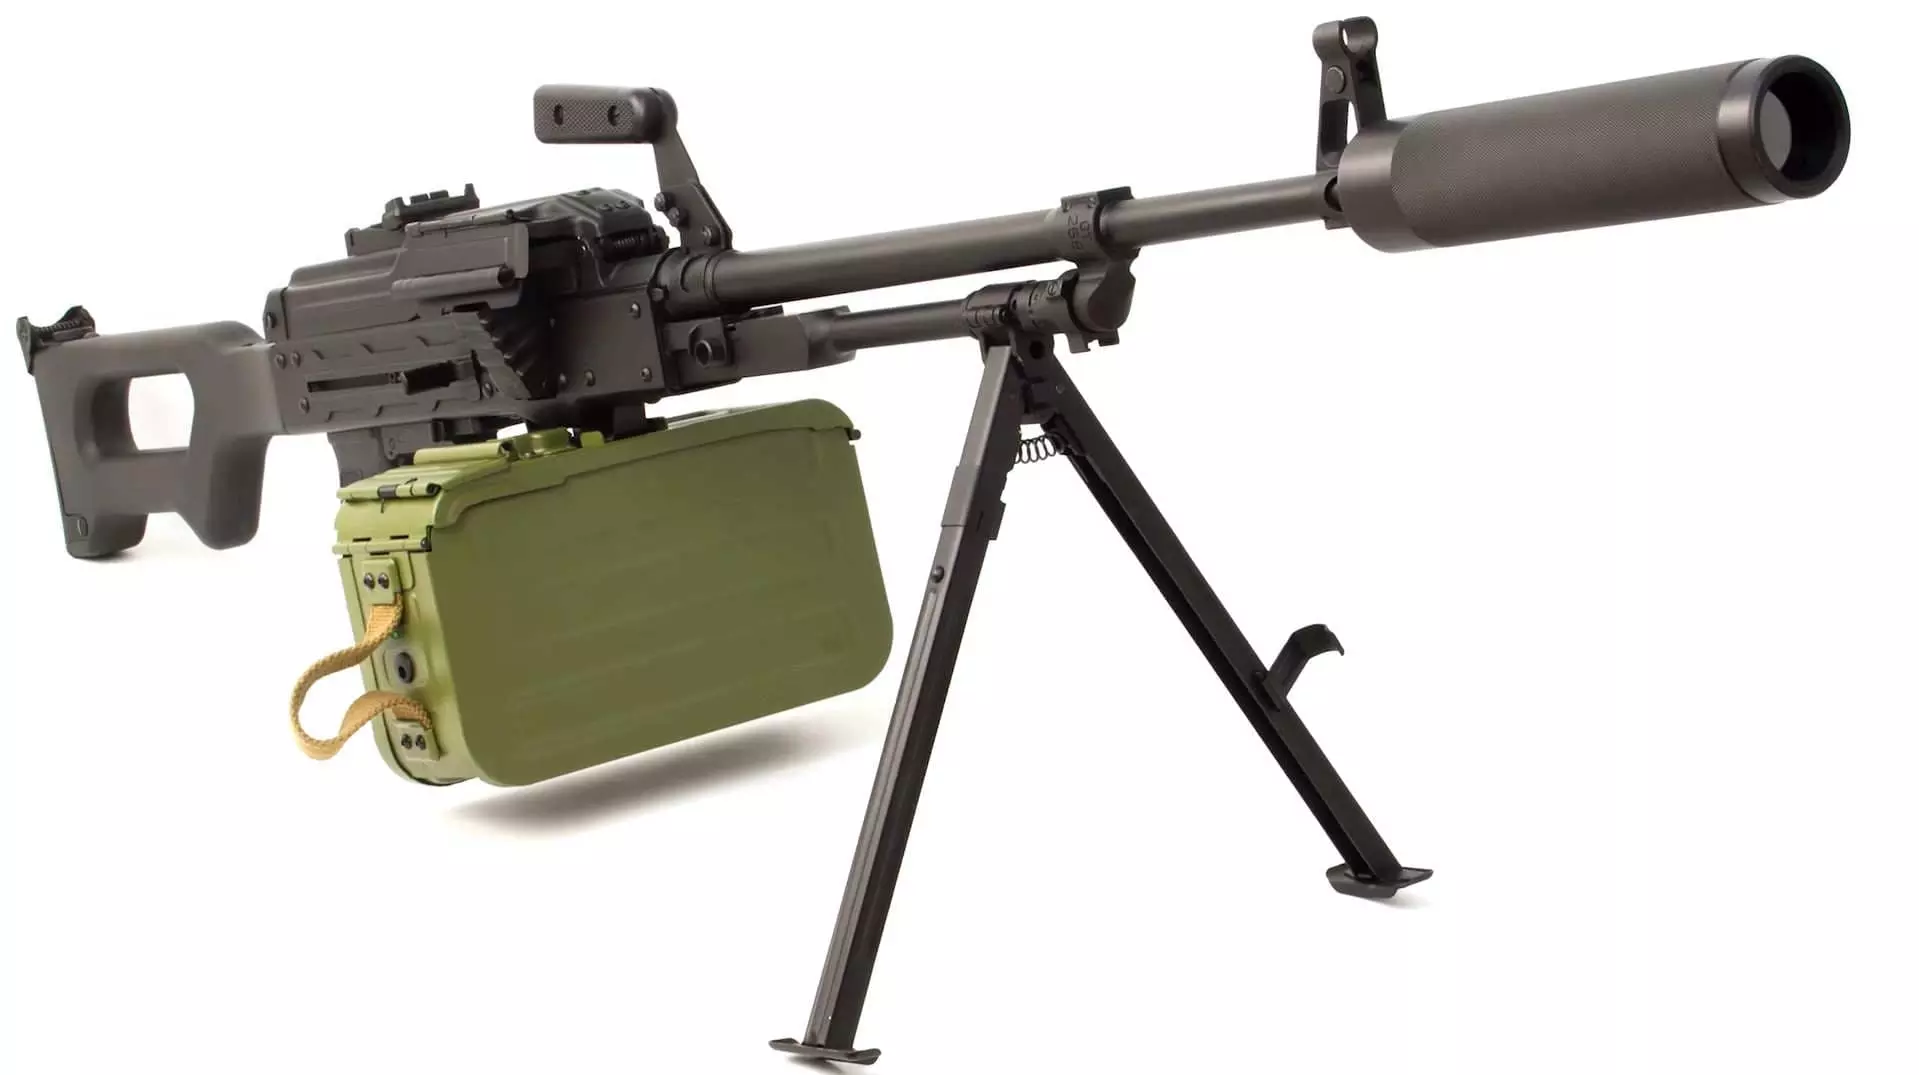 PKM Kalashnikov machine gun for laser tag games